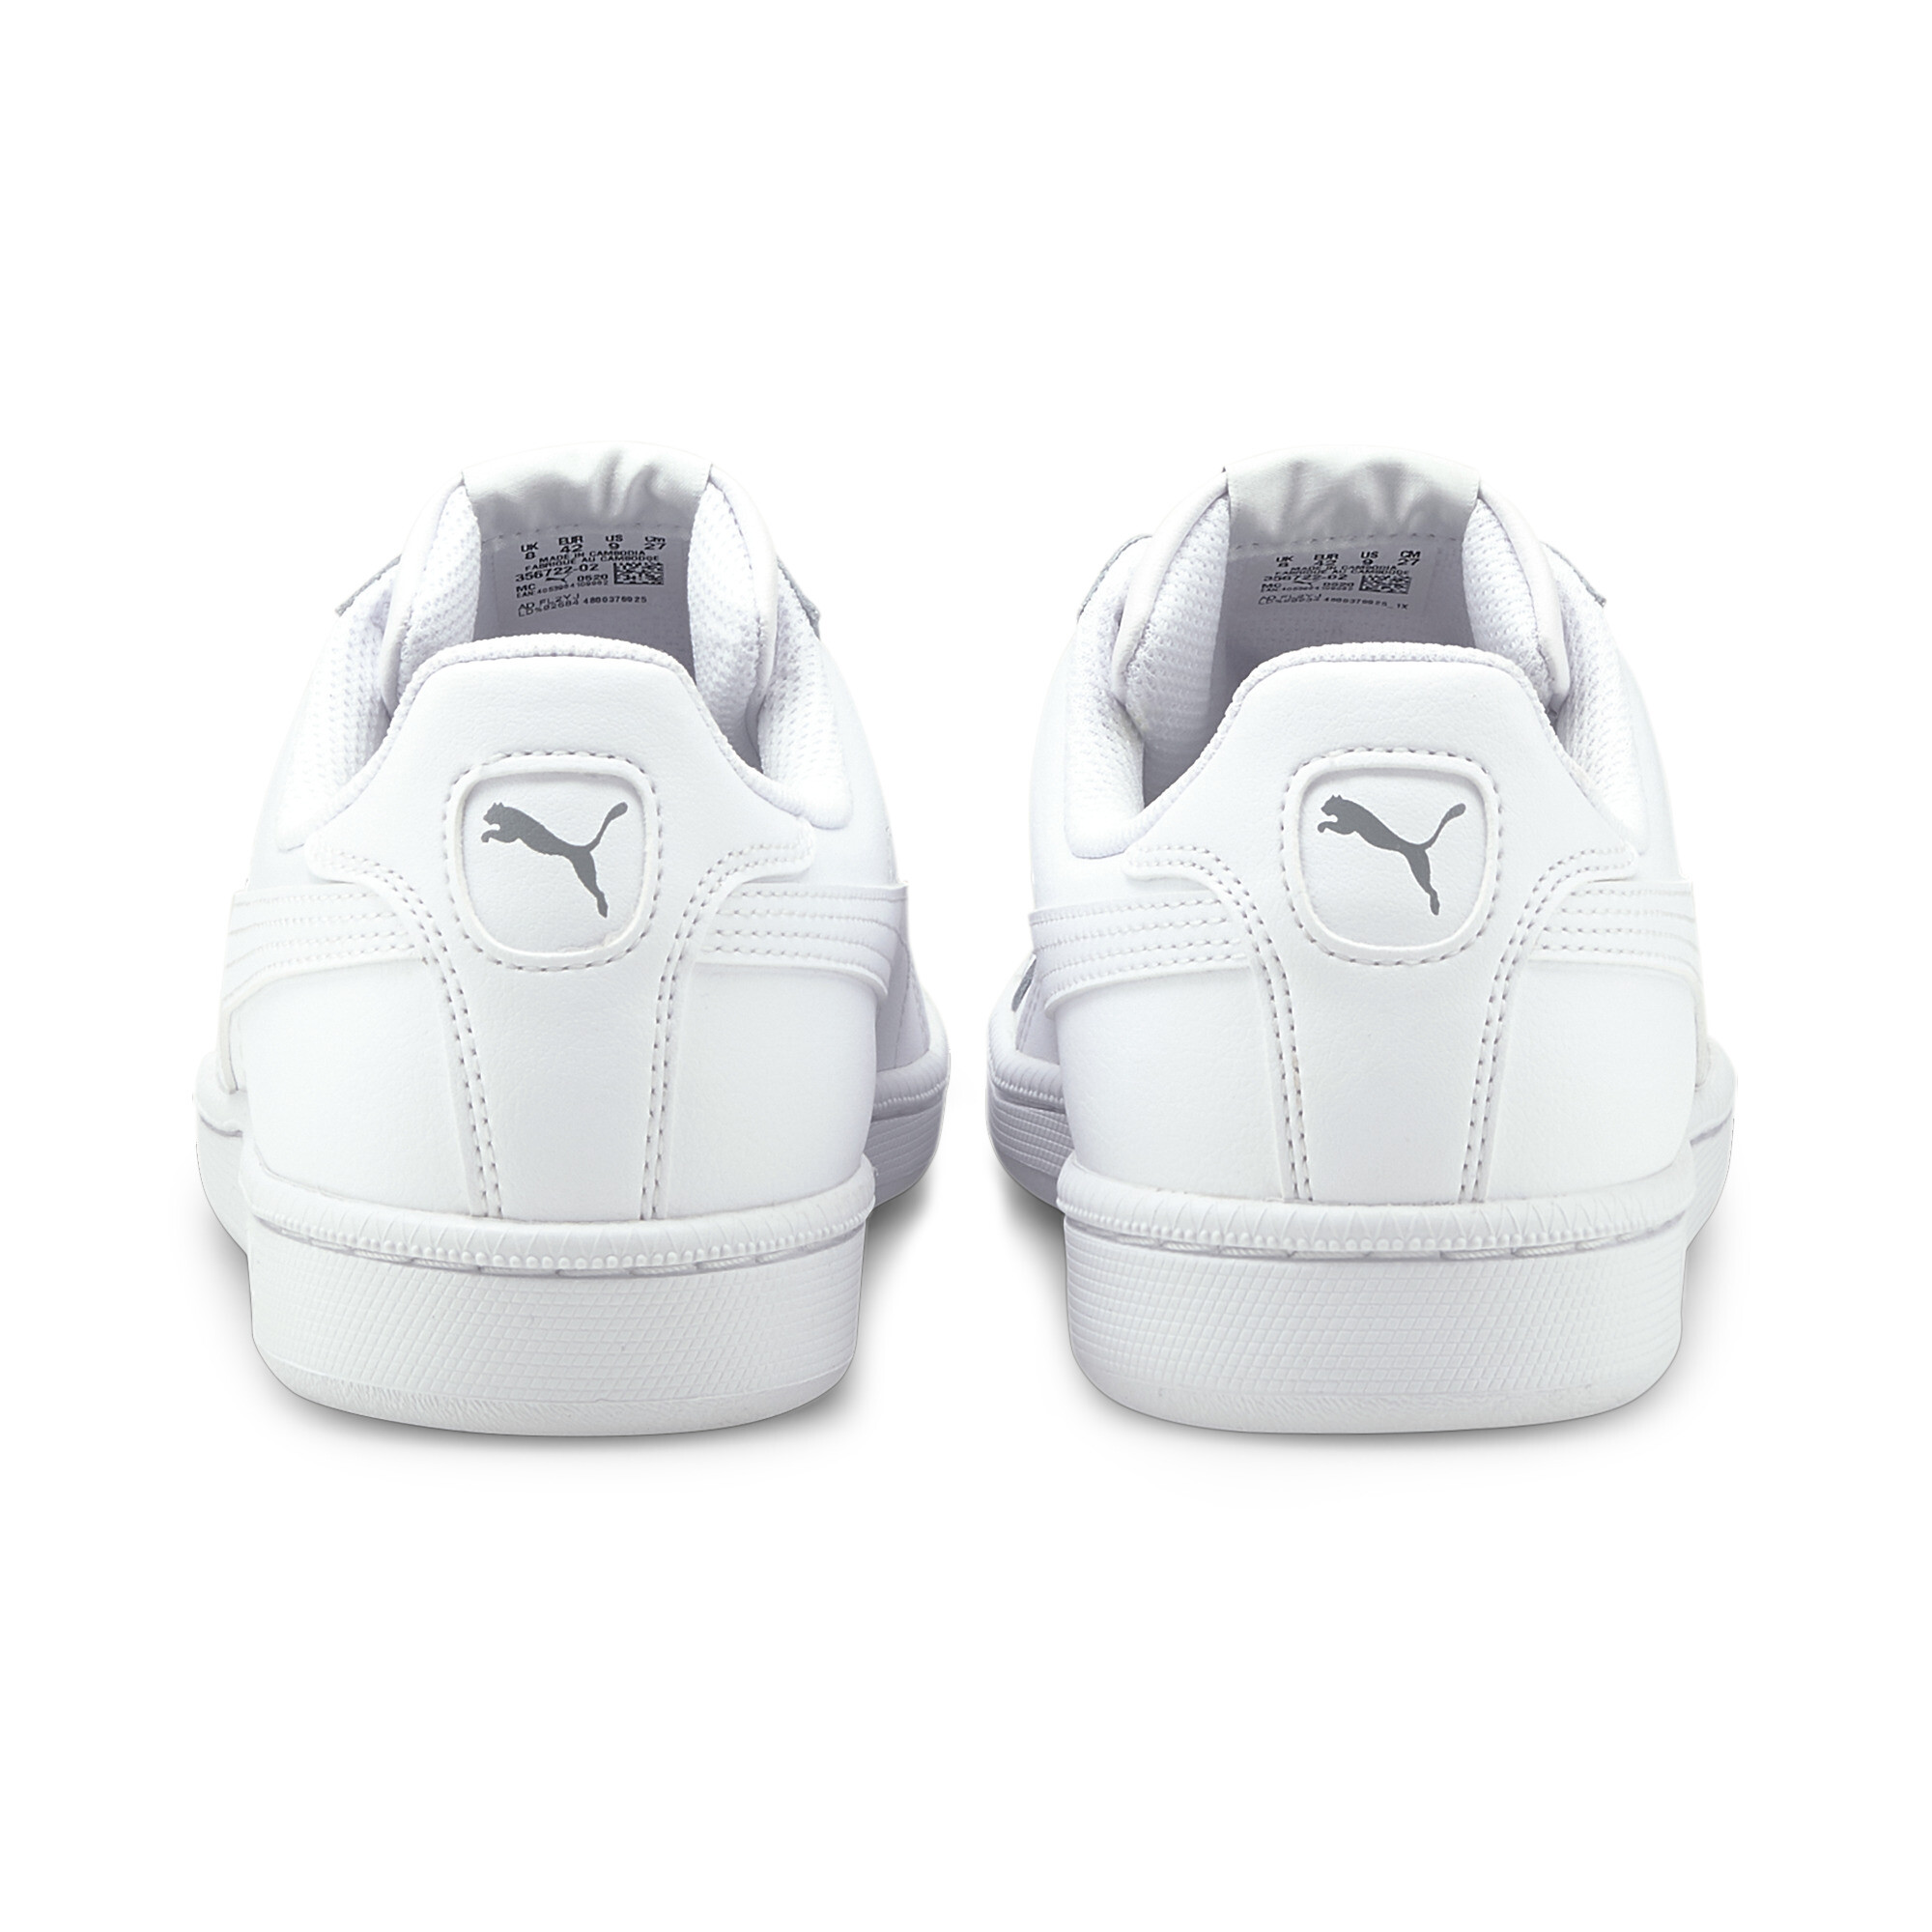 Indexbild 20 - PUMA Smash Trainers Schuhe Sneakers Sport Classics Unisex Neu